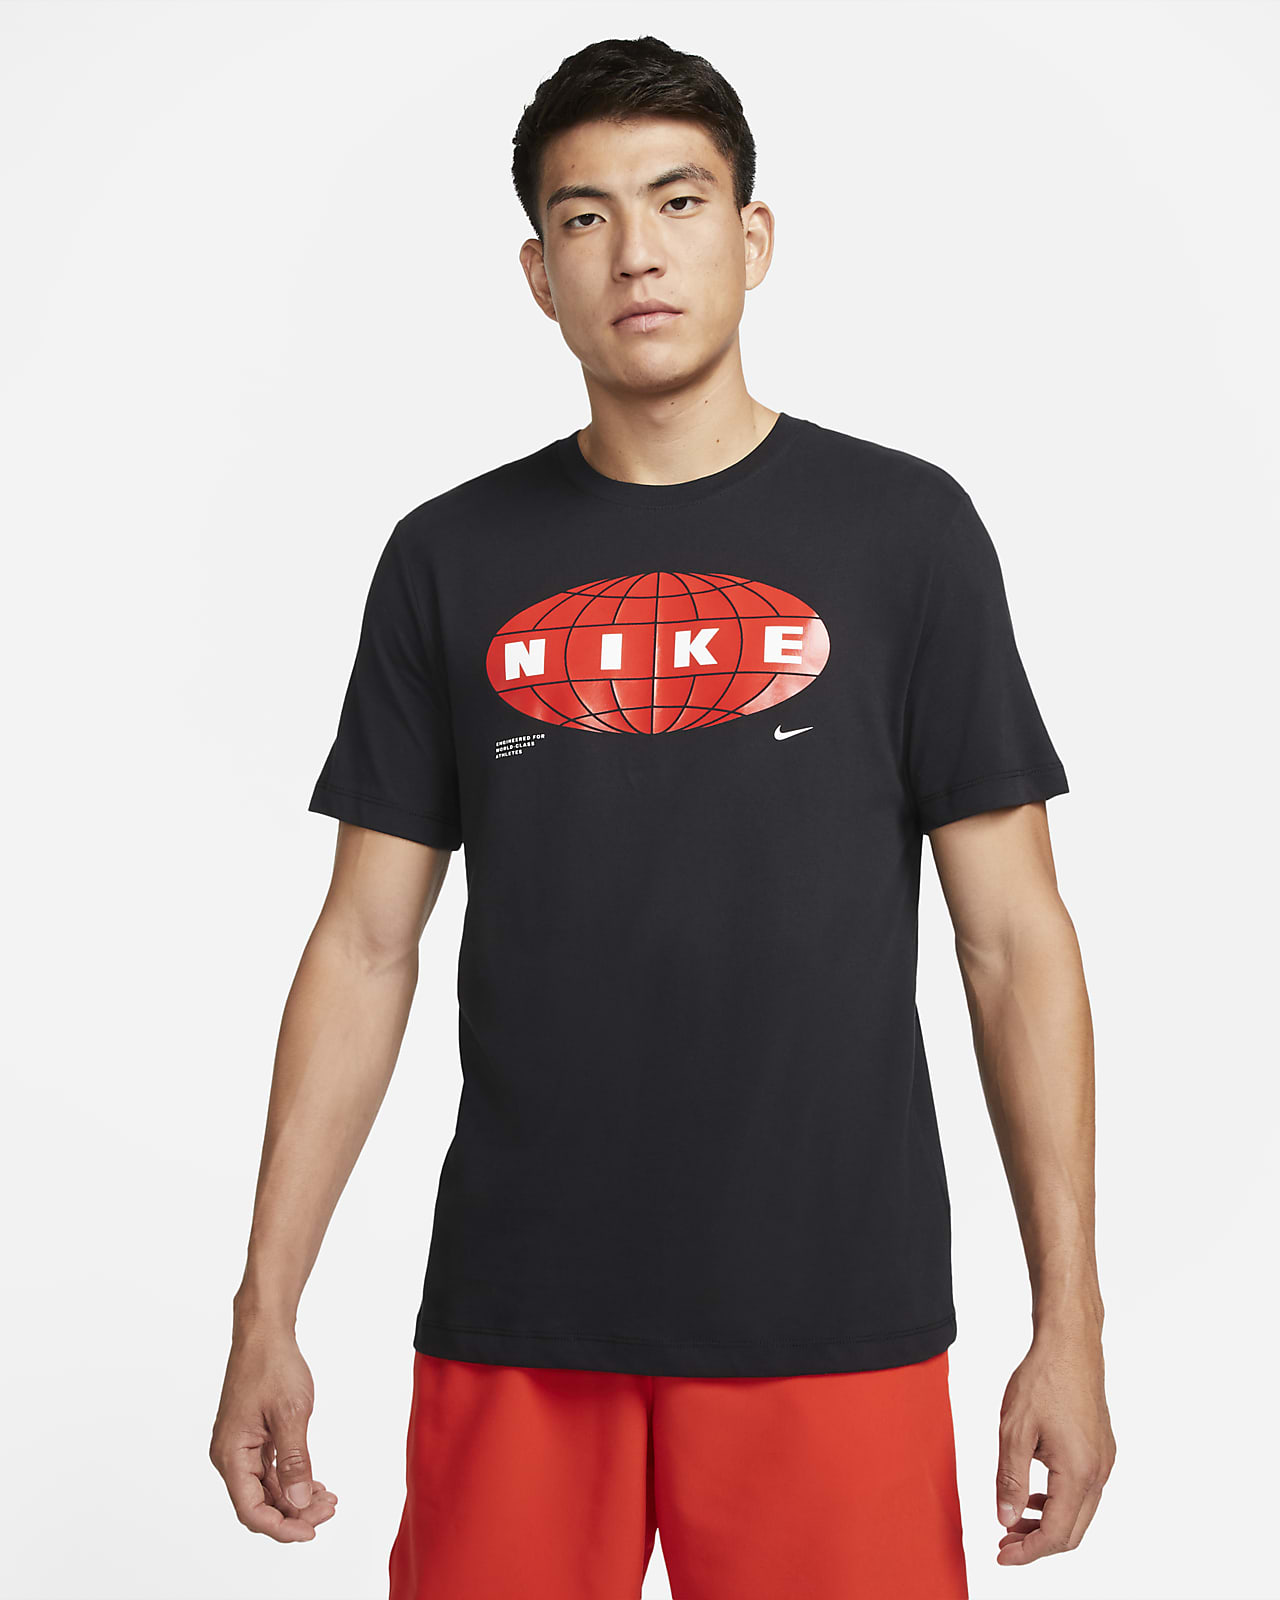 Nike Dri-FIT Men's Graphic Fitness T-Shirt